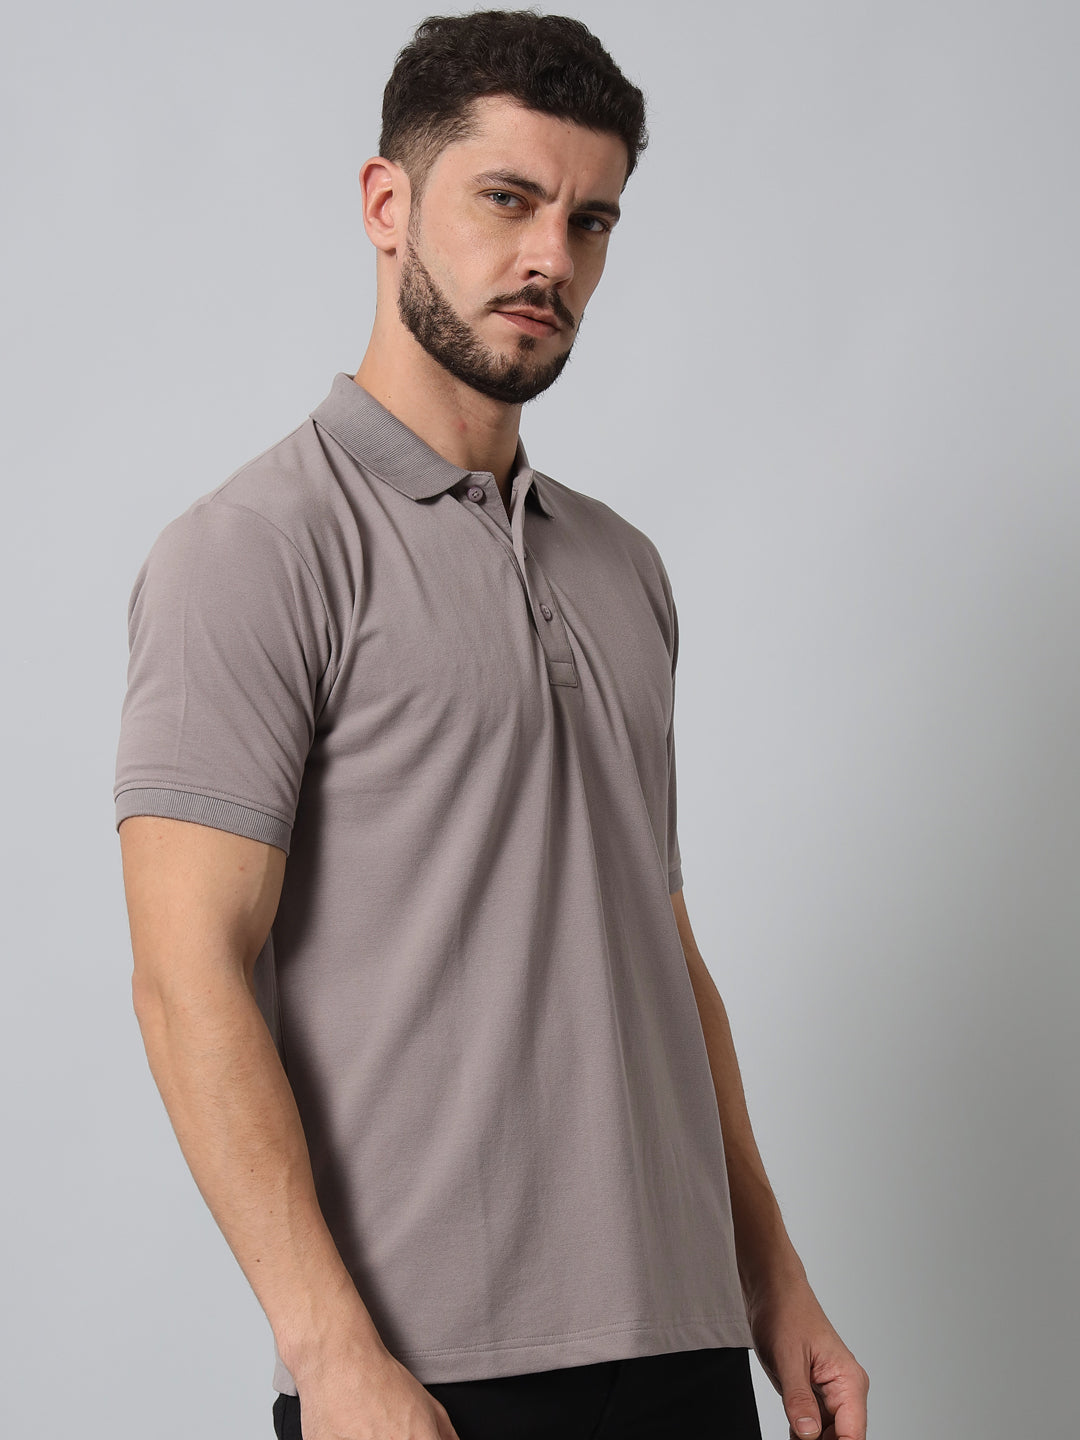 GRIFFEL Men's Steel Grey Cotton Polo T-shirt - griffel